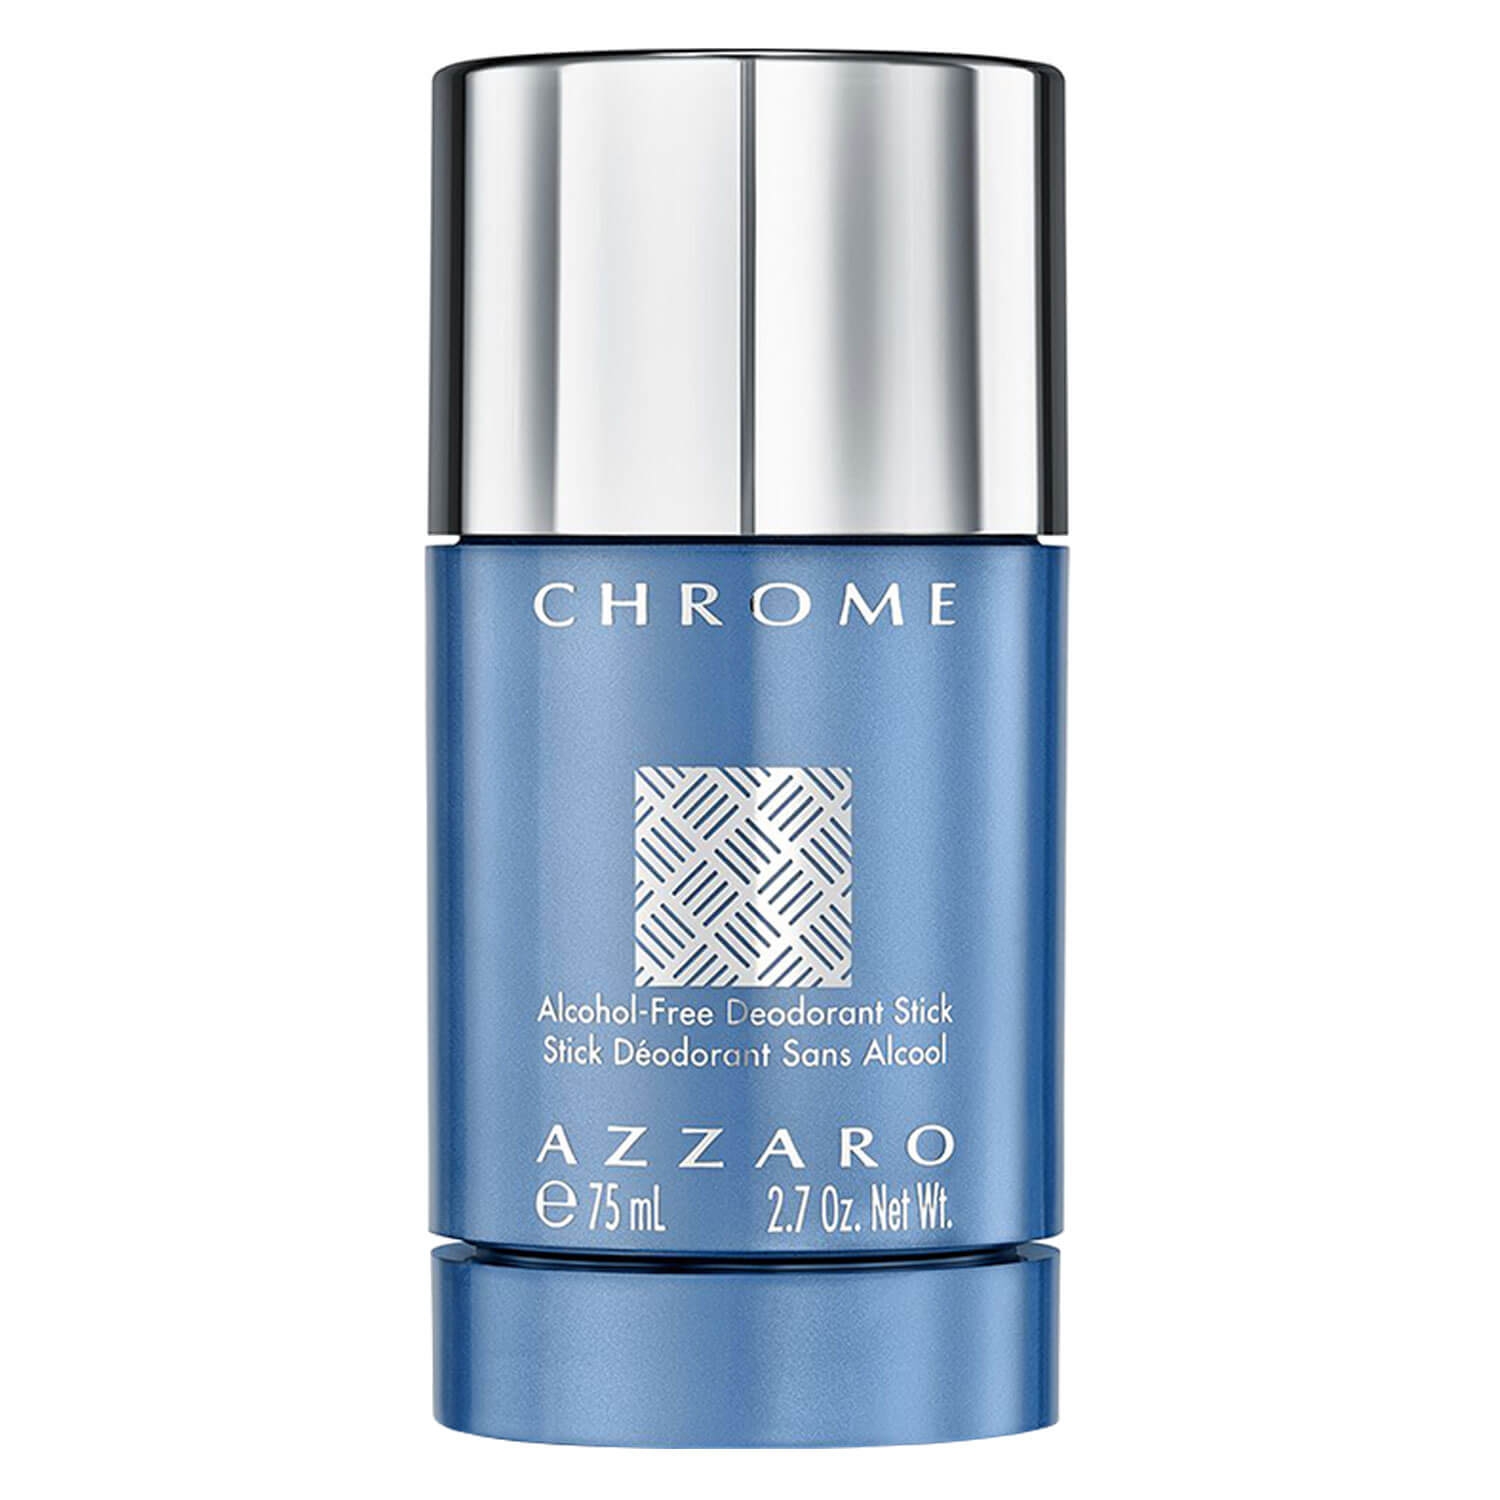 Product image from Azzaro Chrome - Alcohol-Free Deodorant Stick